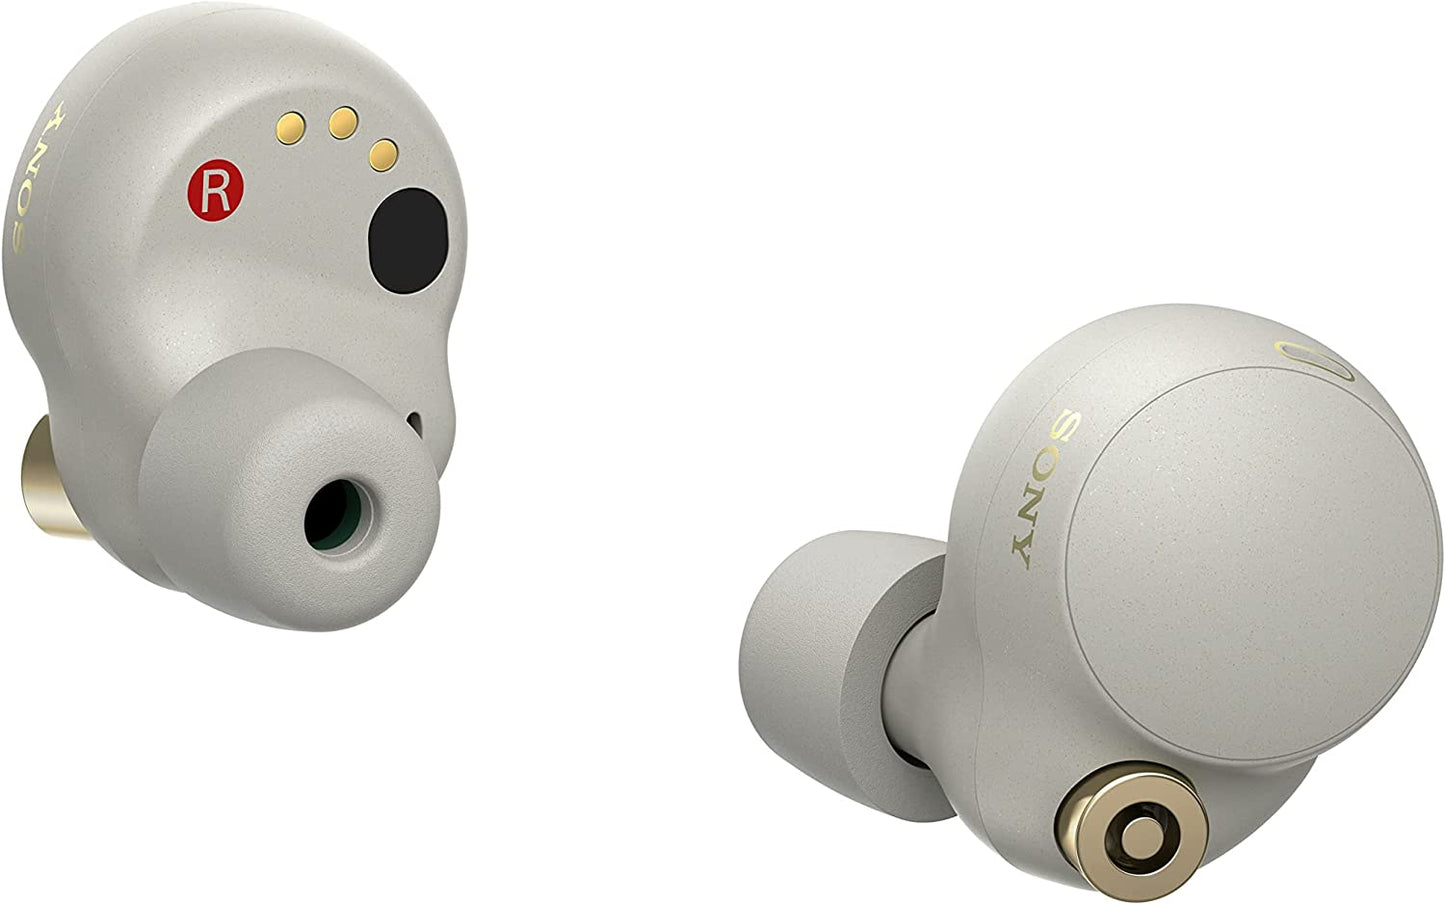 Sony WF-1000XM4 Industry Leading Noise Canceling Truly Wireless Earbud